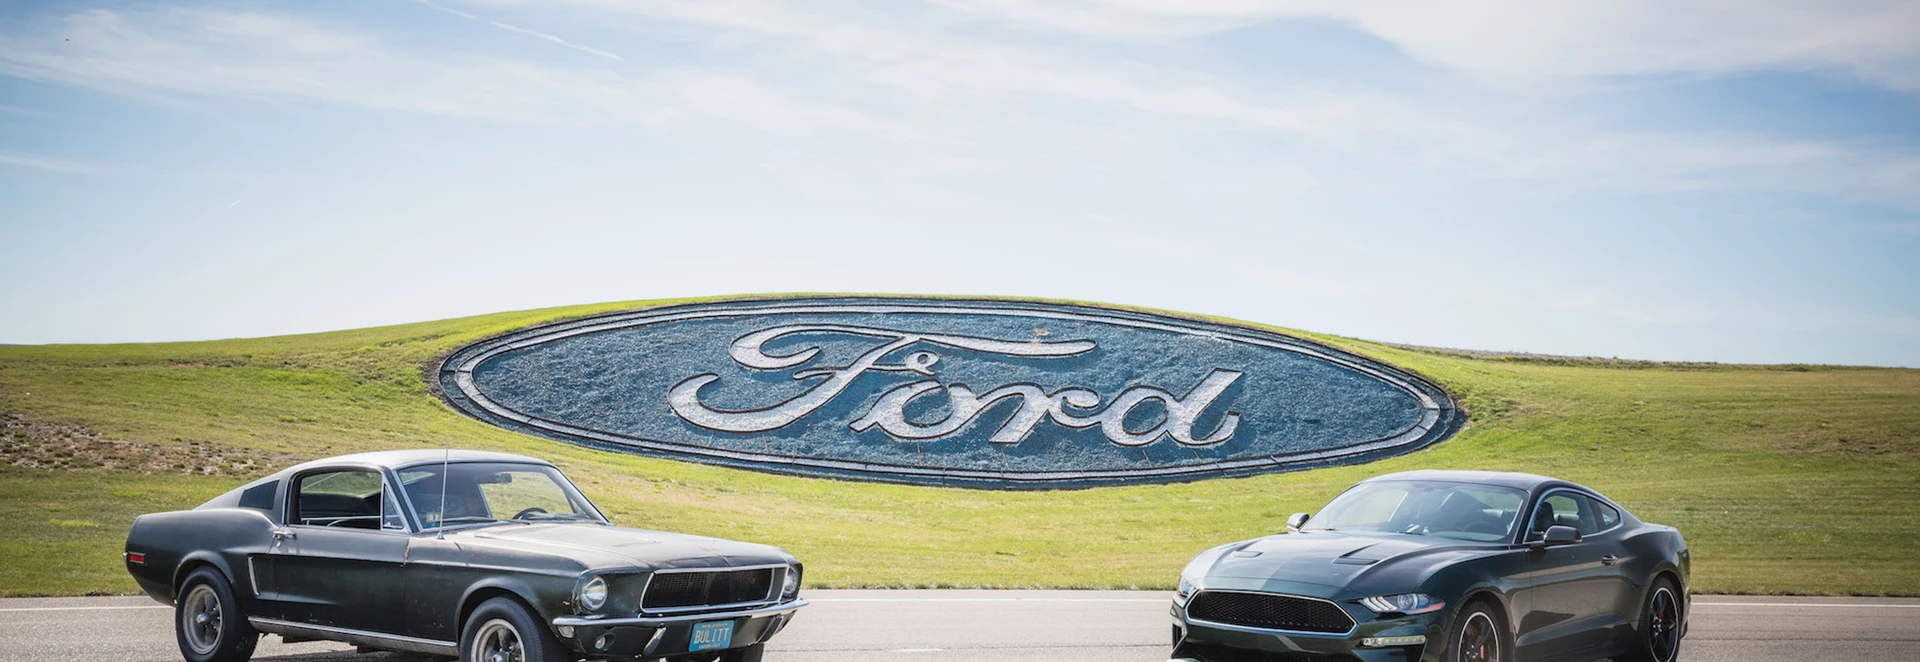 Ford Bullitt Mustang unveiled at the Detroit motor show 2018 